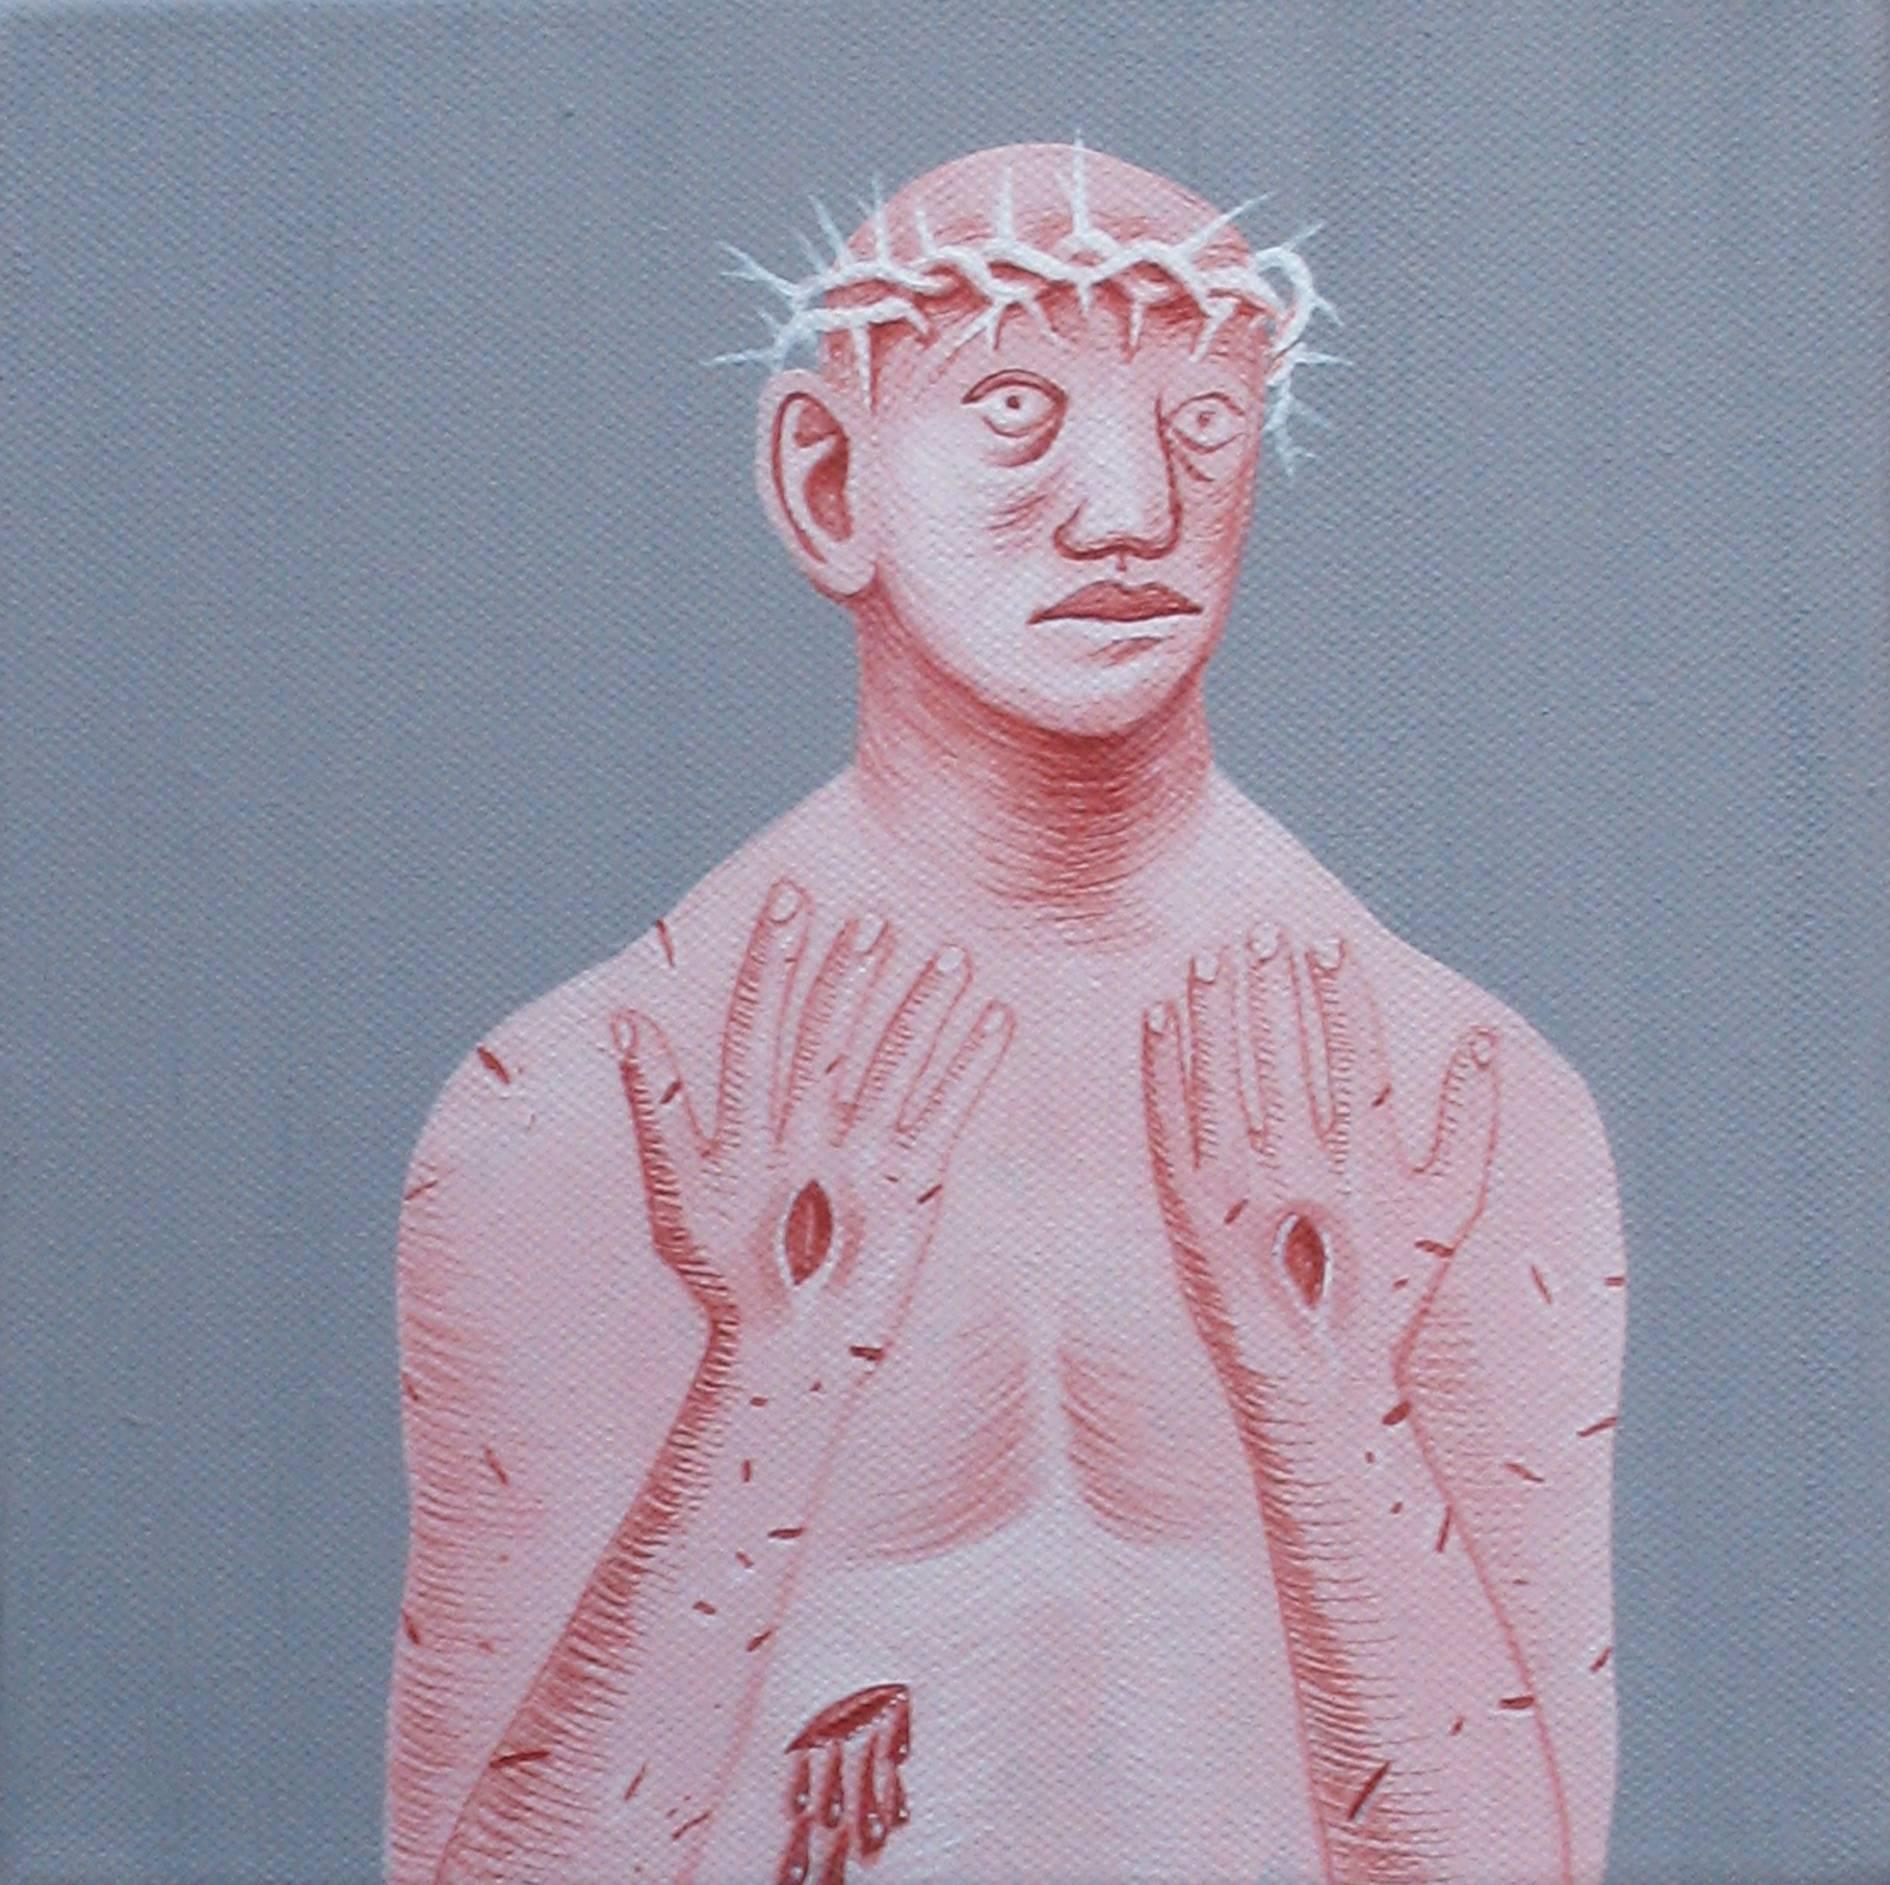 Alexandru Rădvan Figurative Painting - Small Christ 6 - Contemporary, Gray, Pink, Acrylic on Canvas, 21st Century